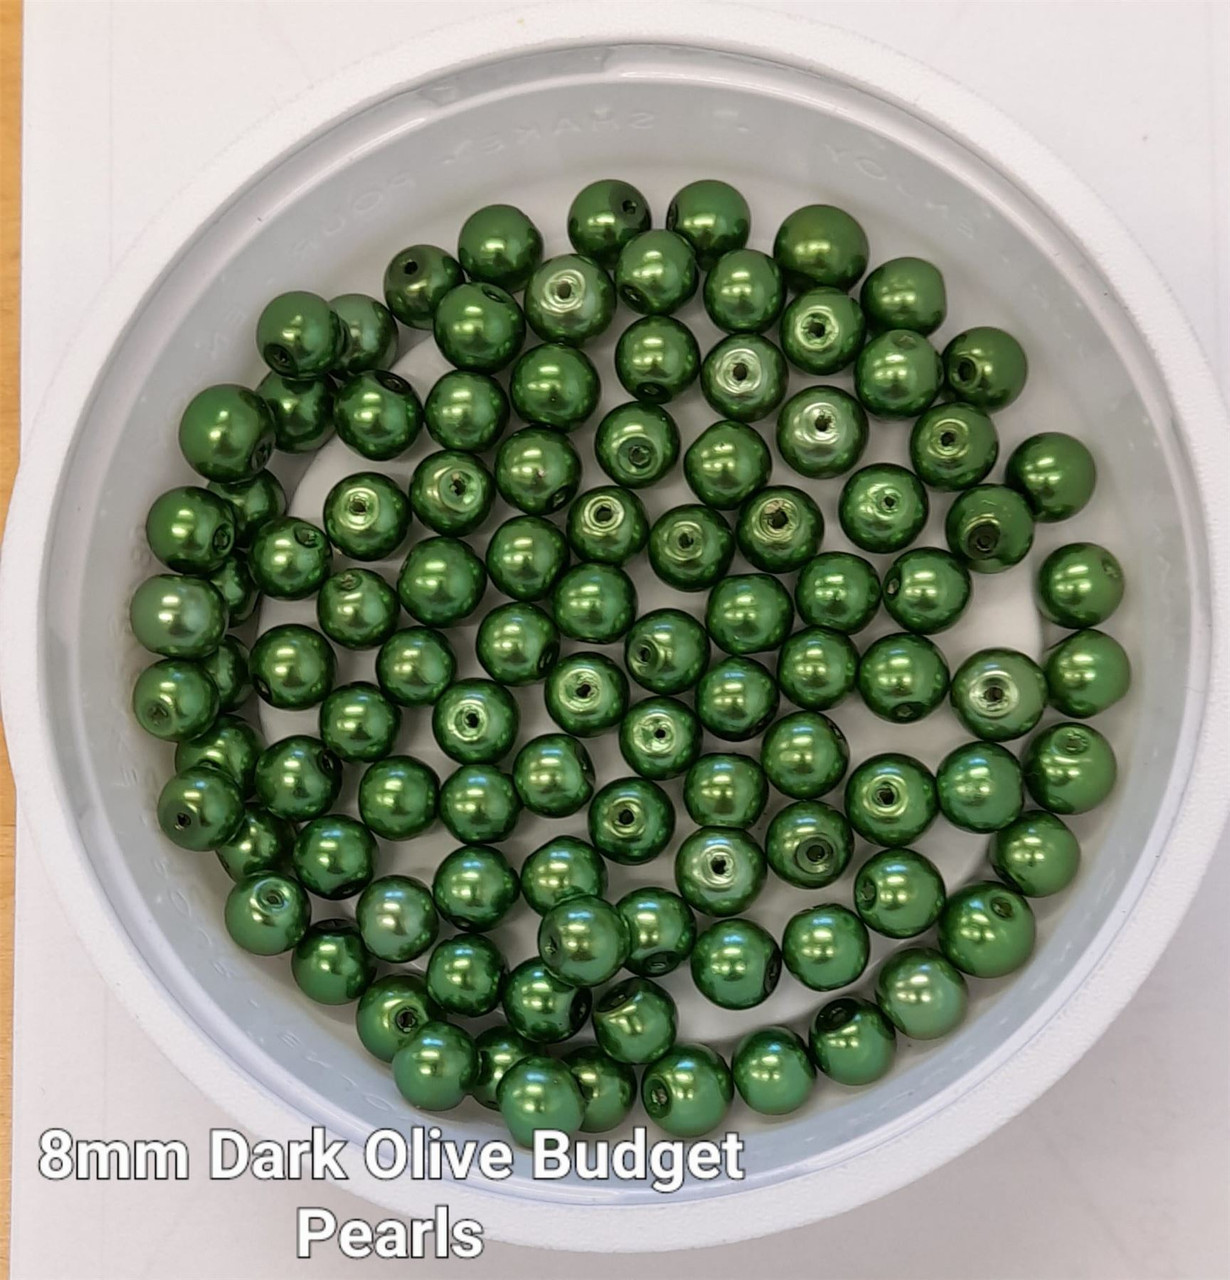 8mm budget Glass Pearls - Dark Olive (100 beads)